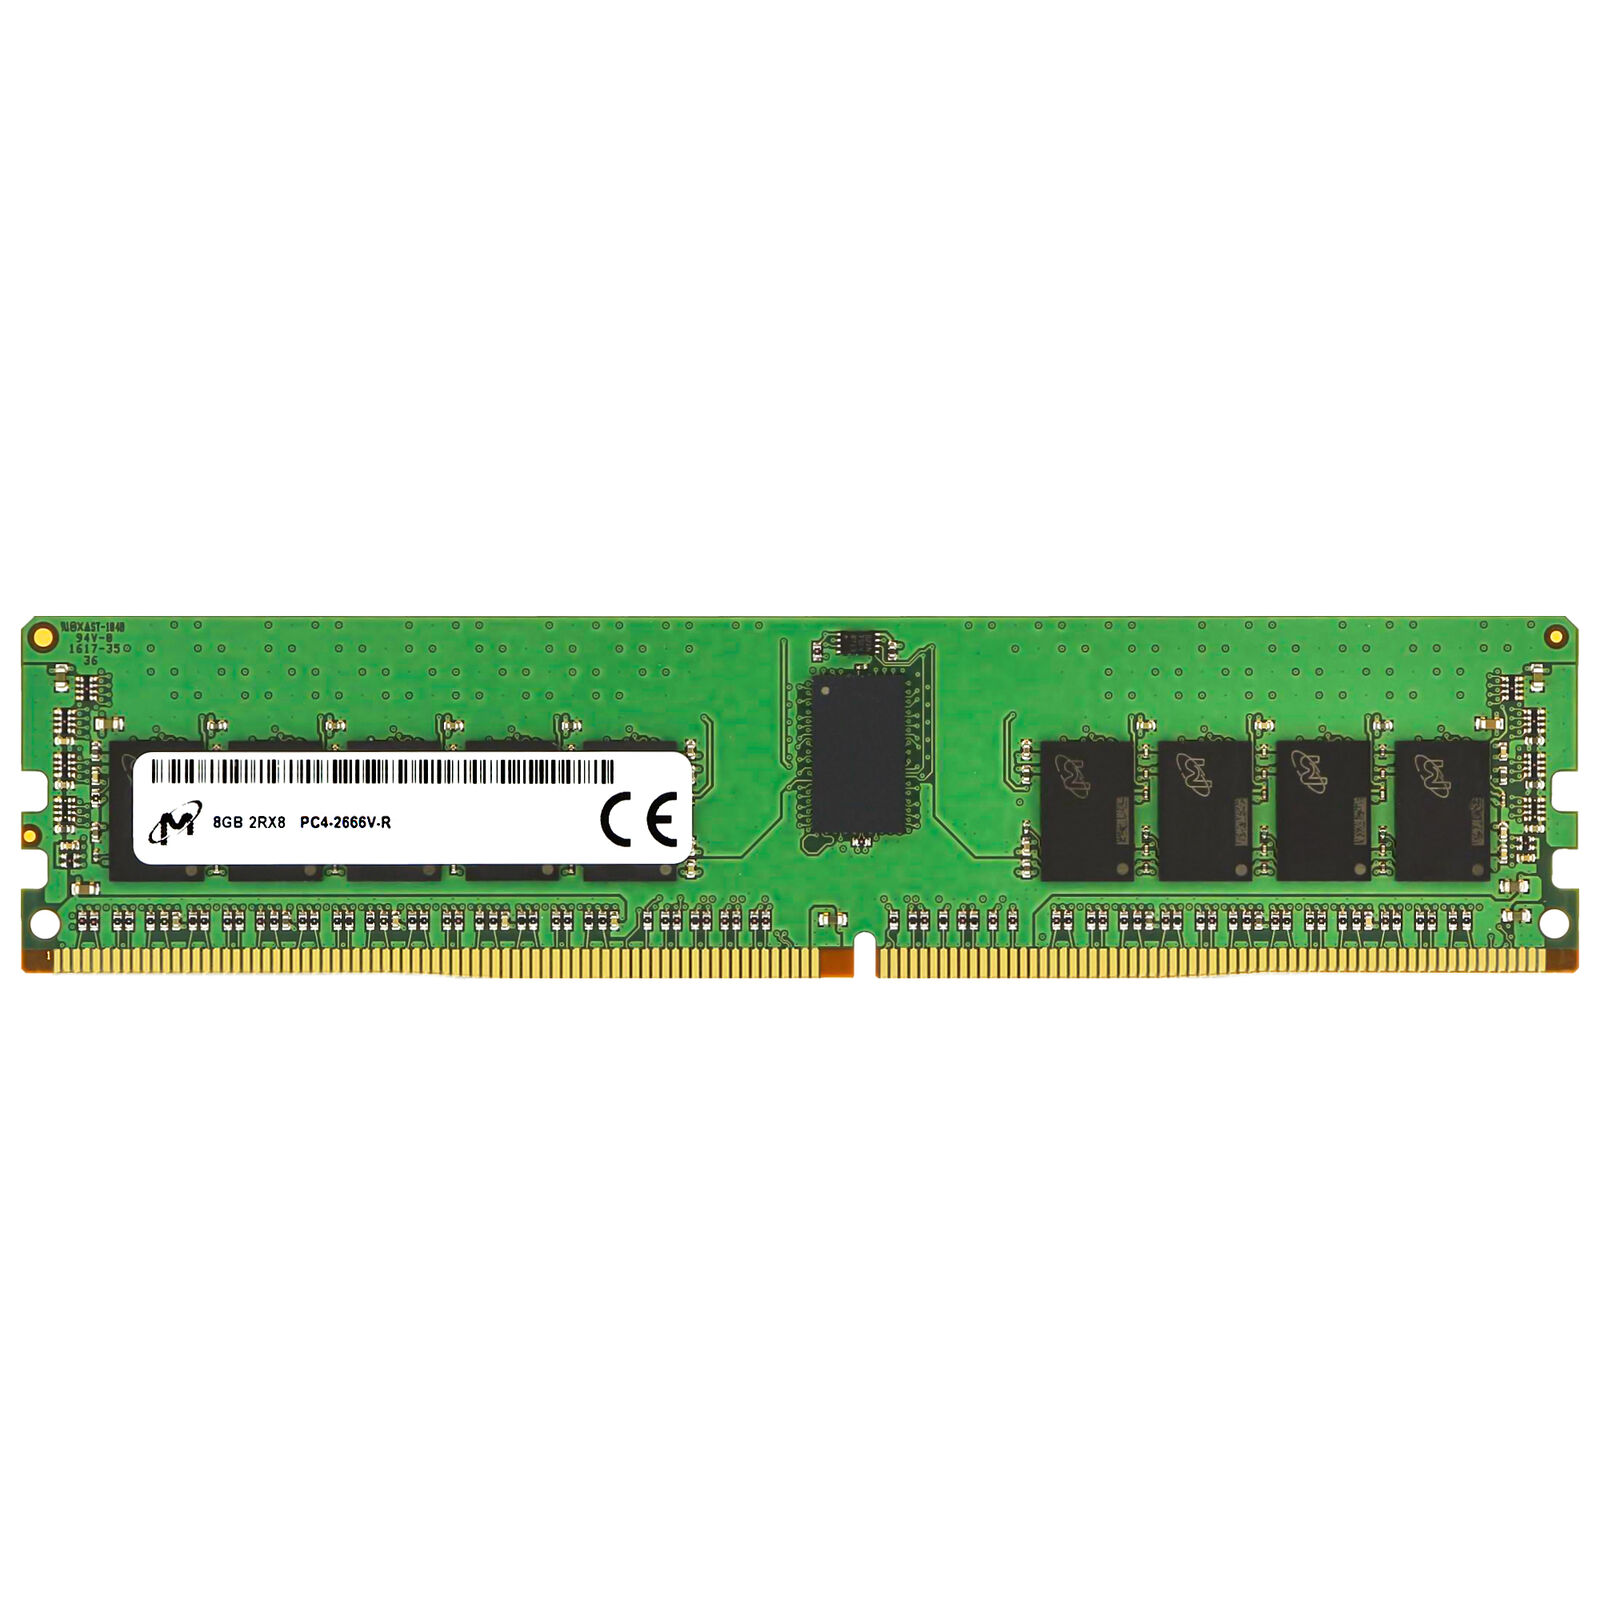 Micron 8GB 2Rx8 PC4-2666V RDIMM DDR4-21300 ECC REG Registered Server Memory RAM